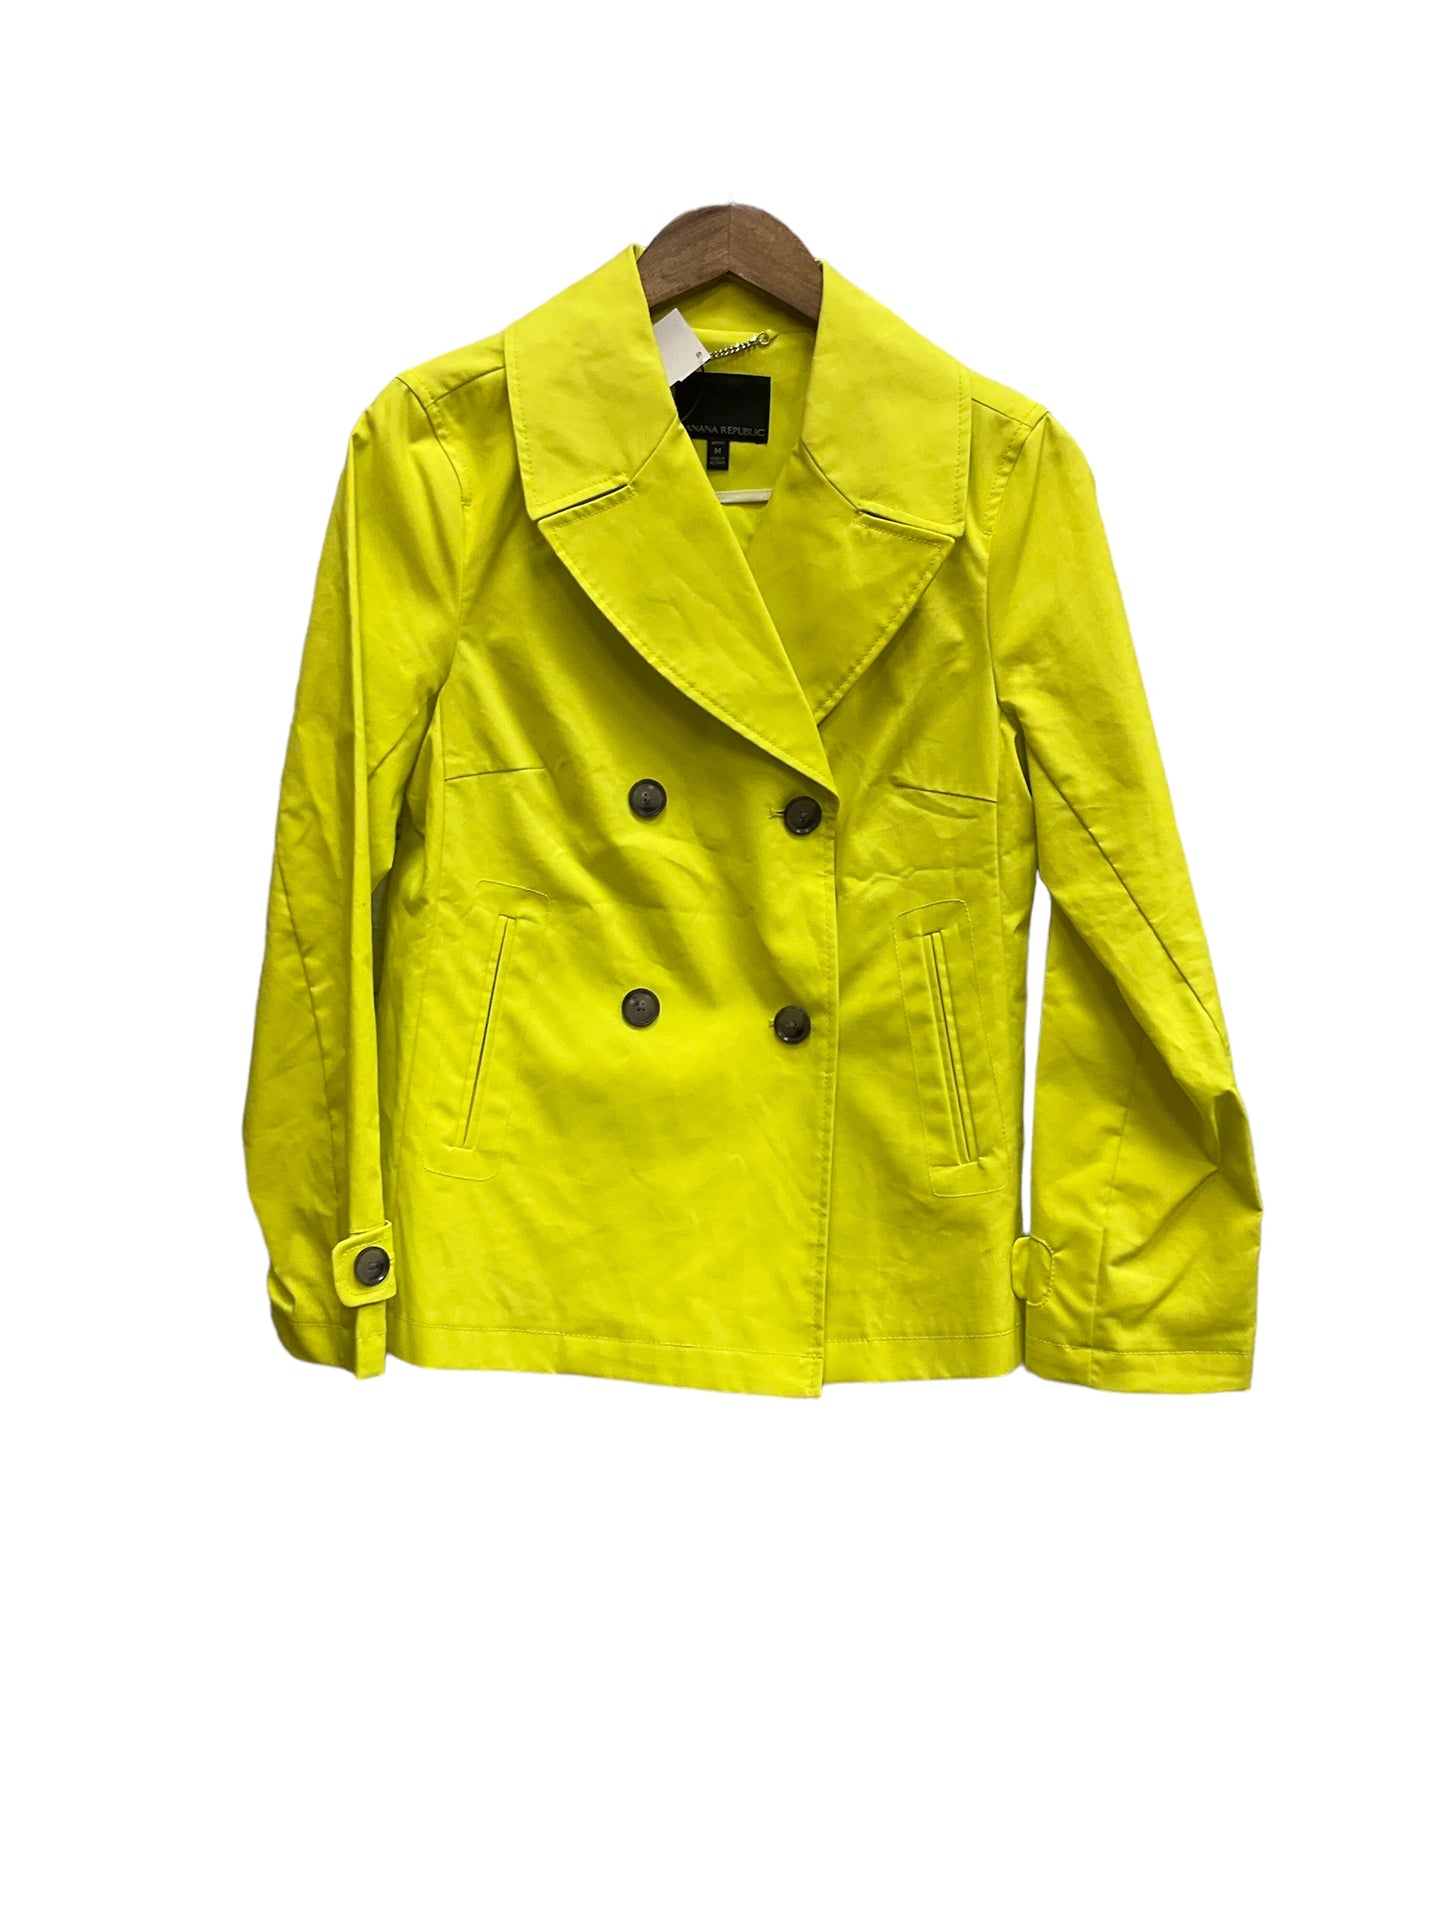 Coat Raincoat By Banana Republic  Size: M